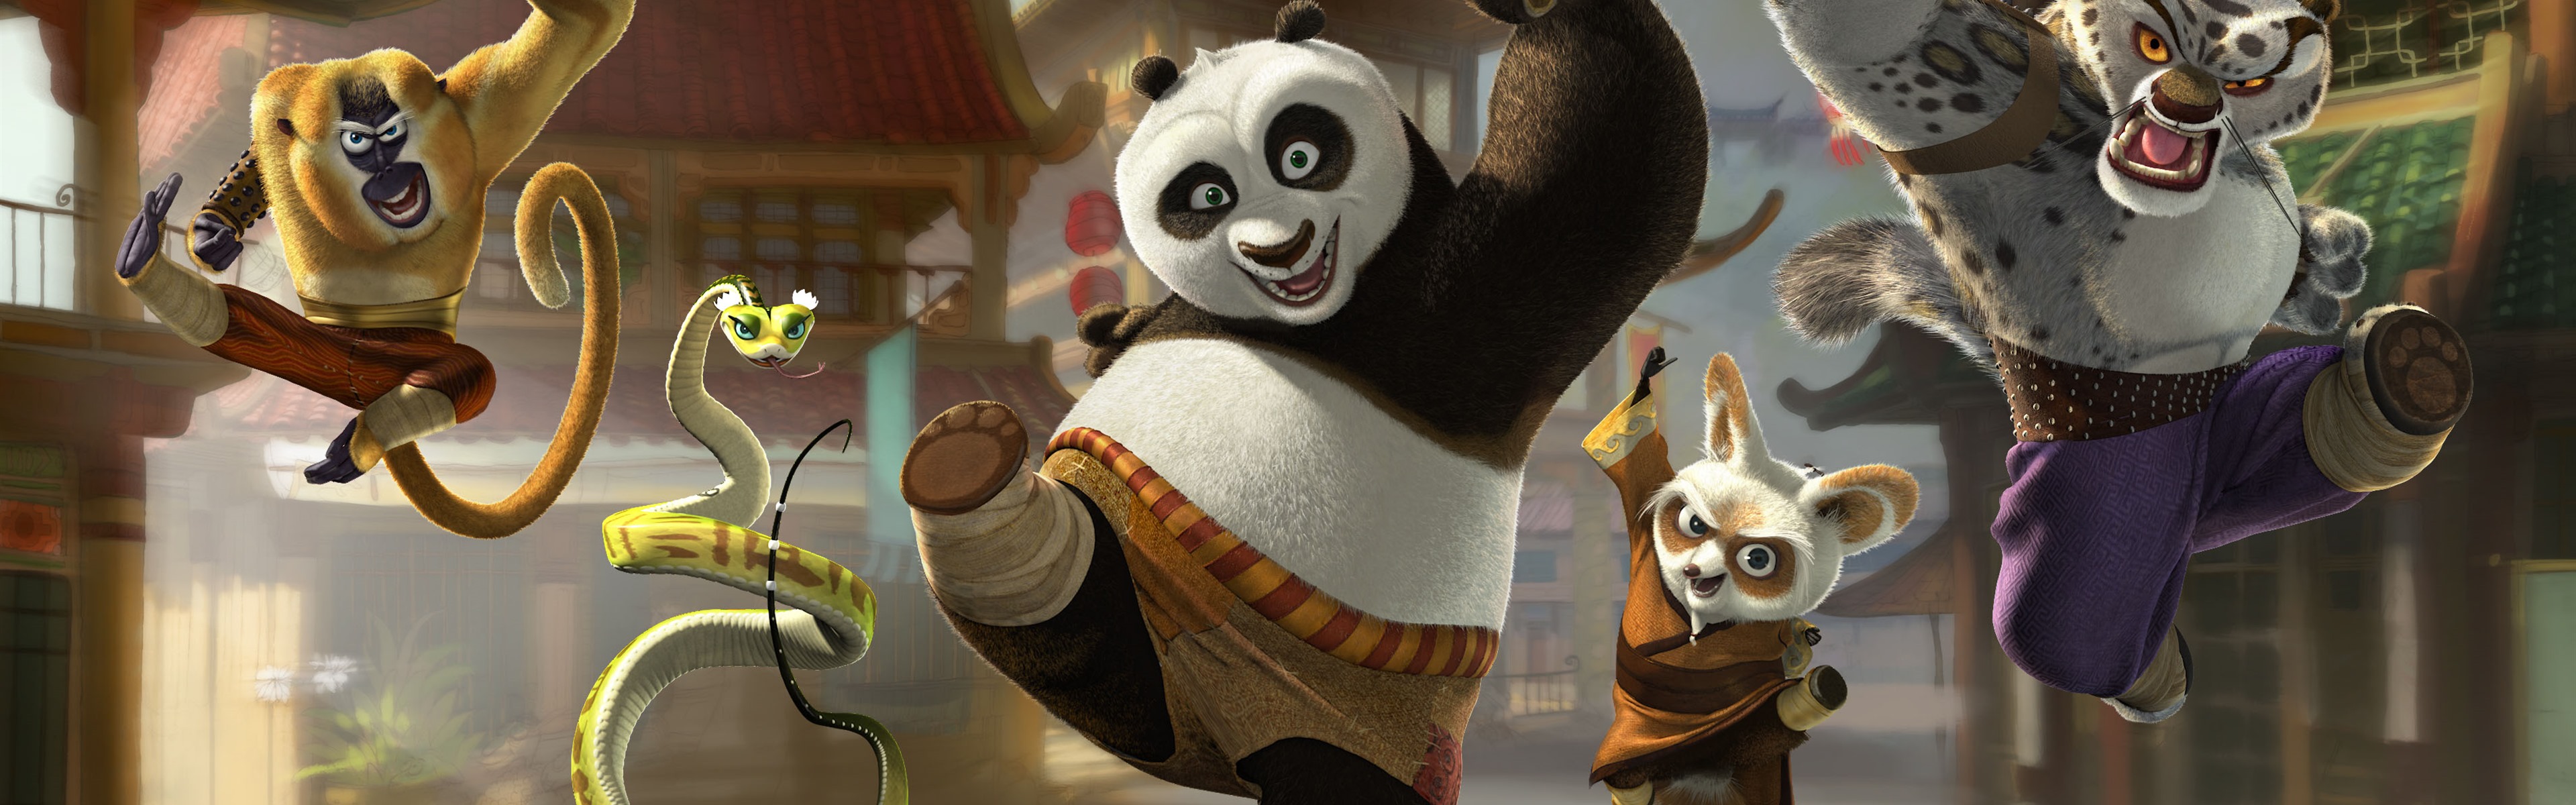 Kung Fu Panda 3, HD movie wallpapers #15 - 3840x1200